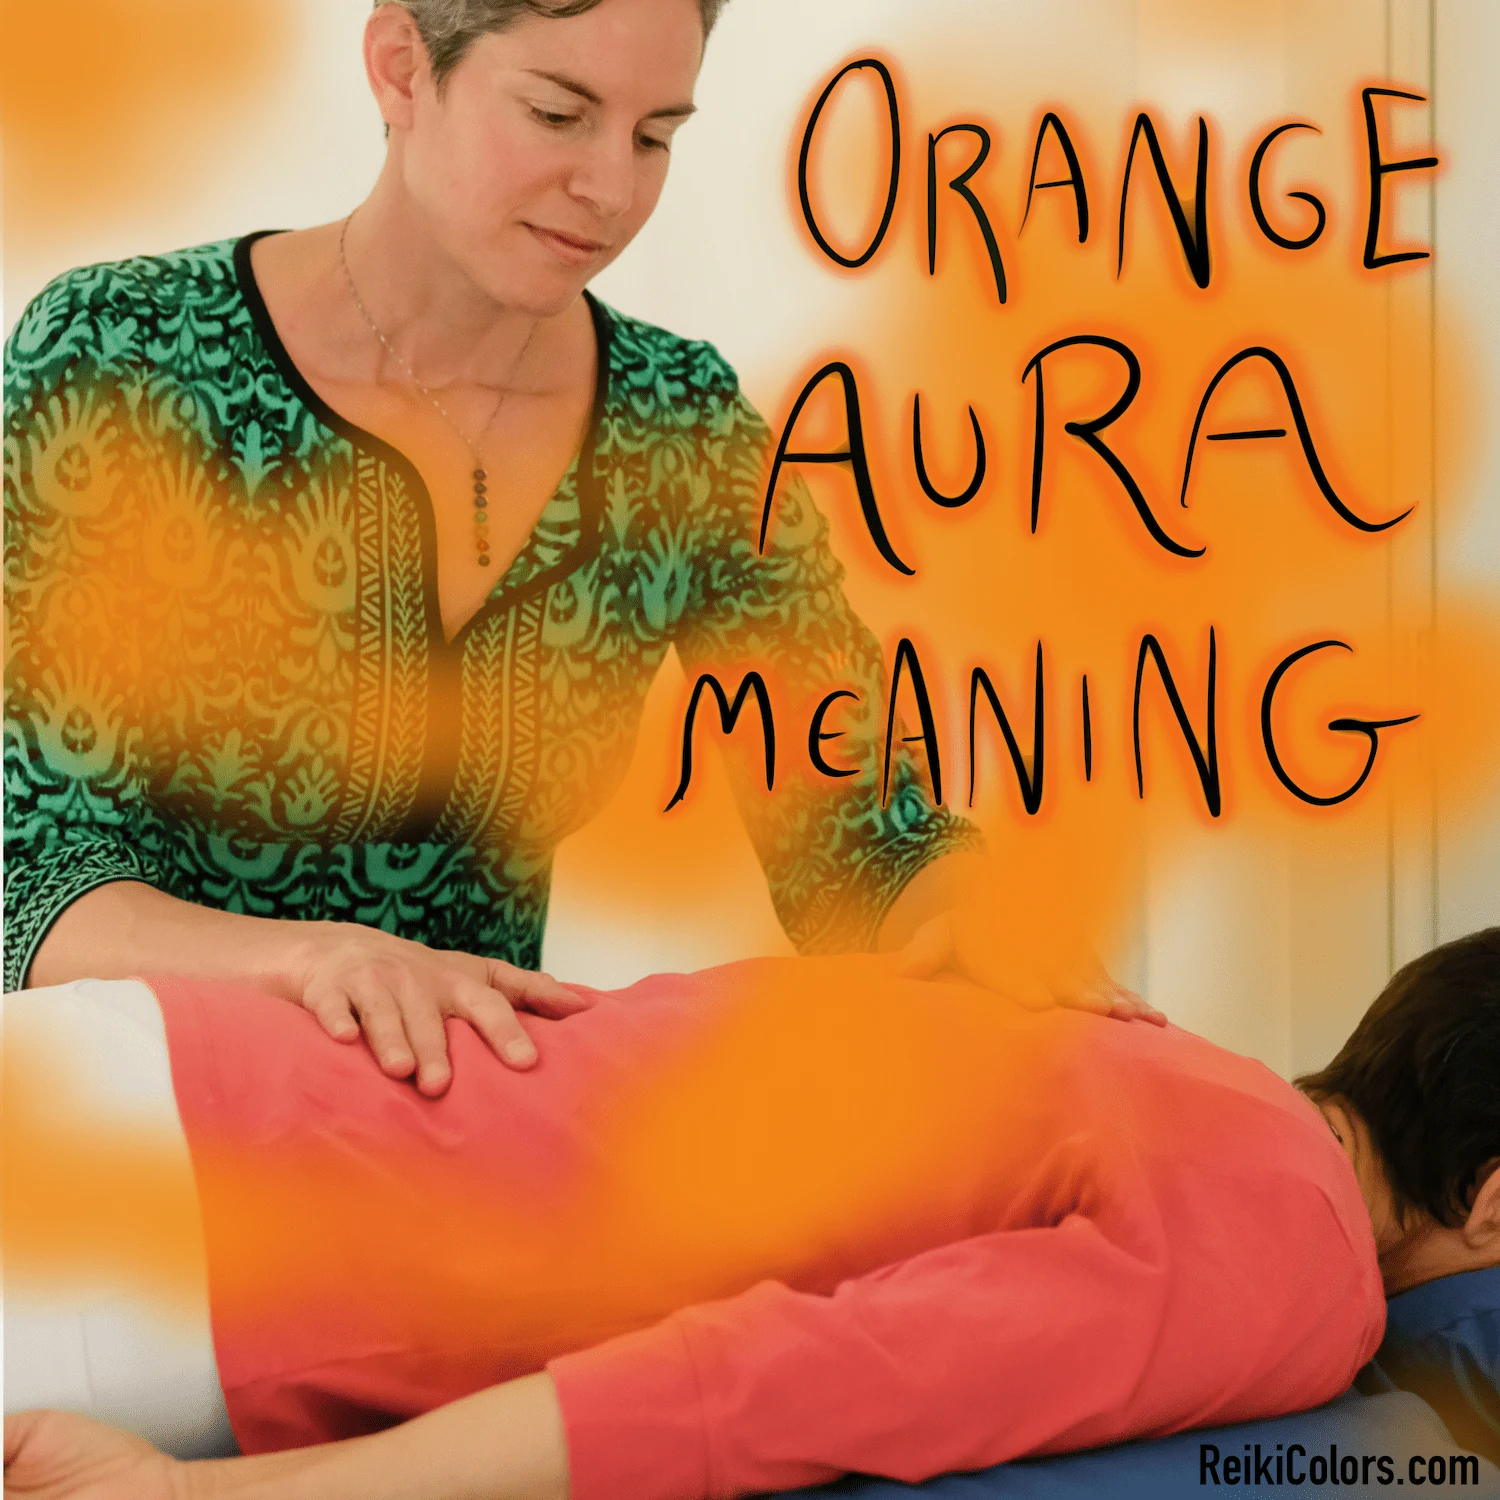 Orange aura